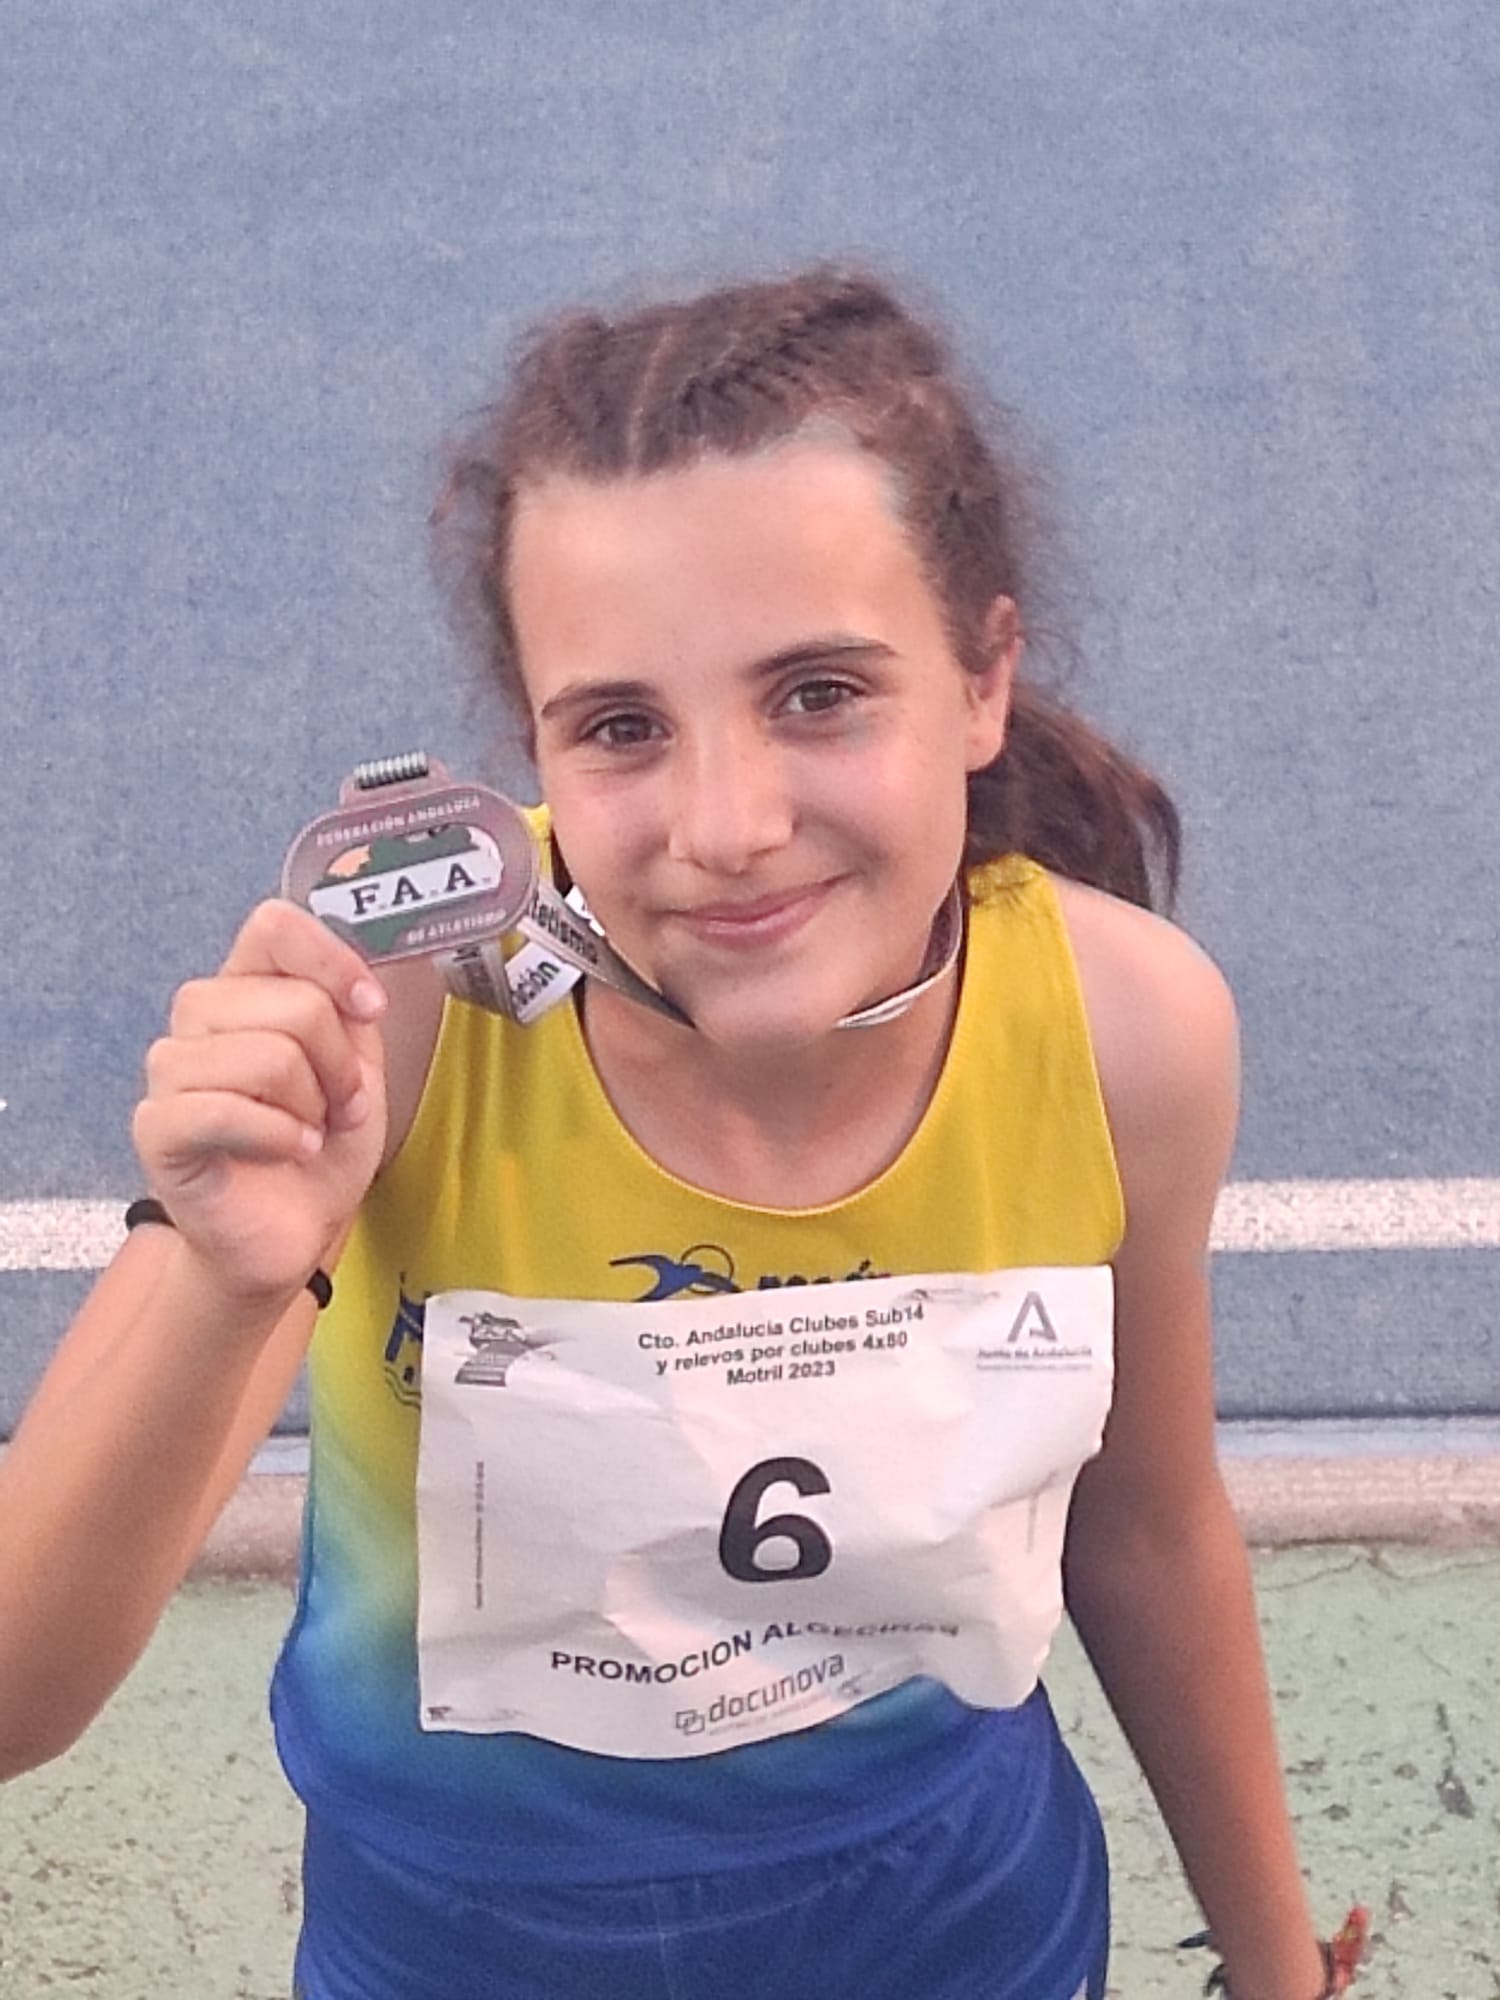 Elsa Vázquez Cobos, “bronce” en el Campeonato de Andalucía de Clubes sub 14